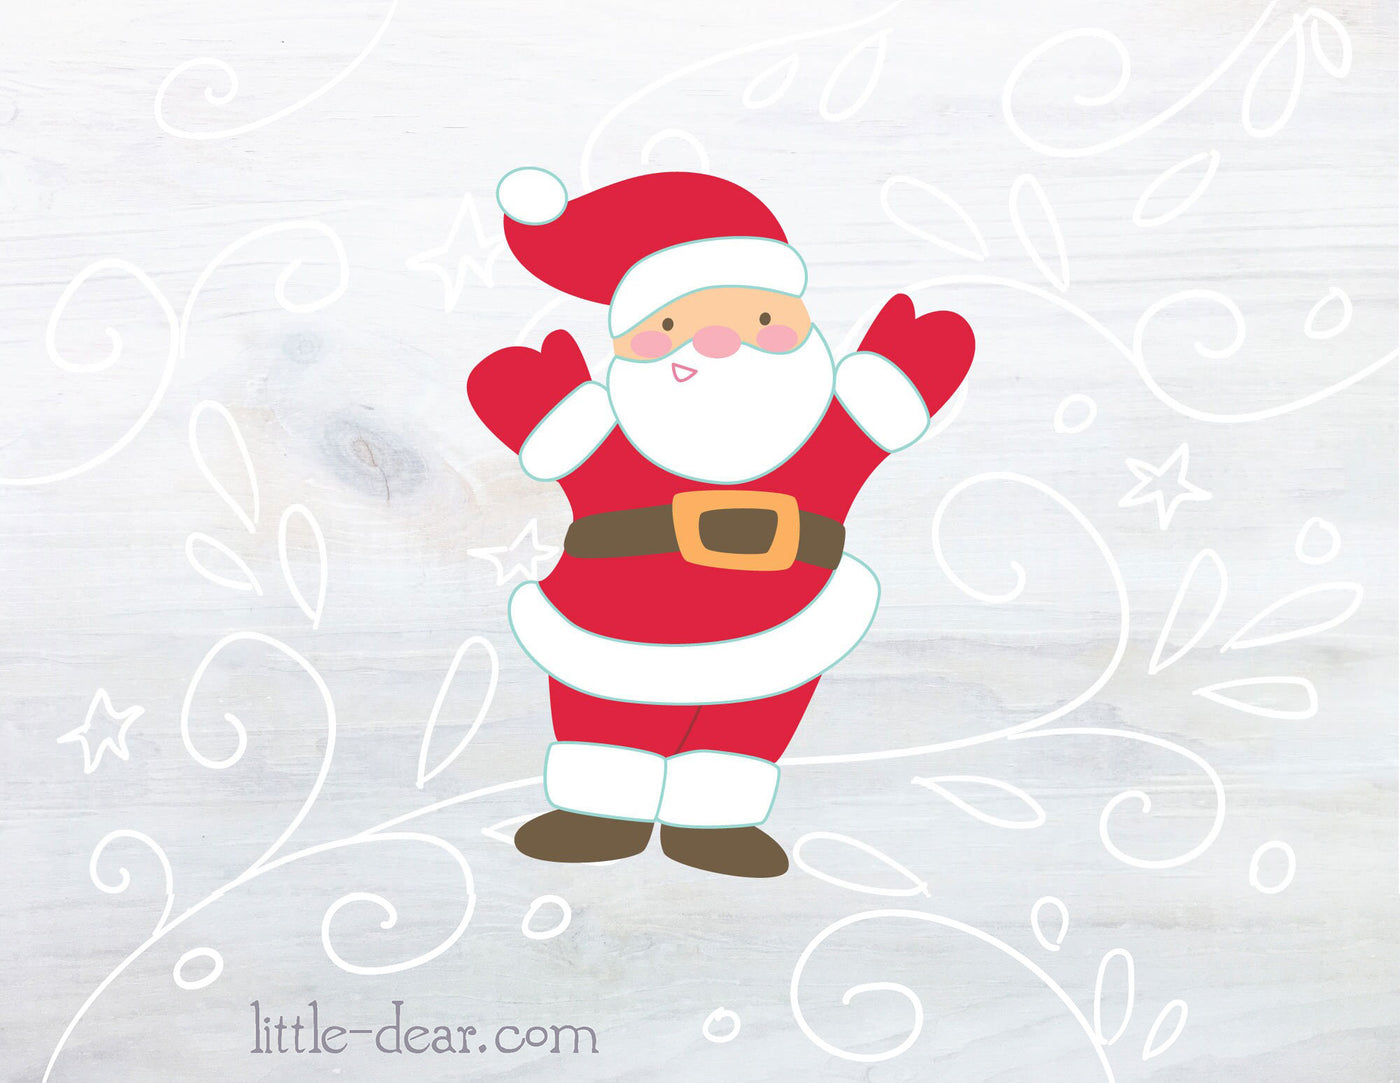 SVG Santa Claus cut files for Cricut, Silhouette, PNG, JPG